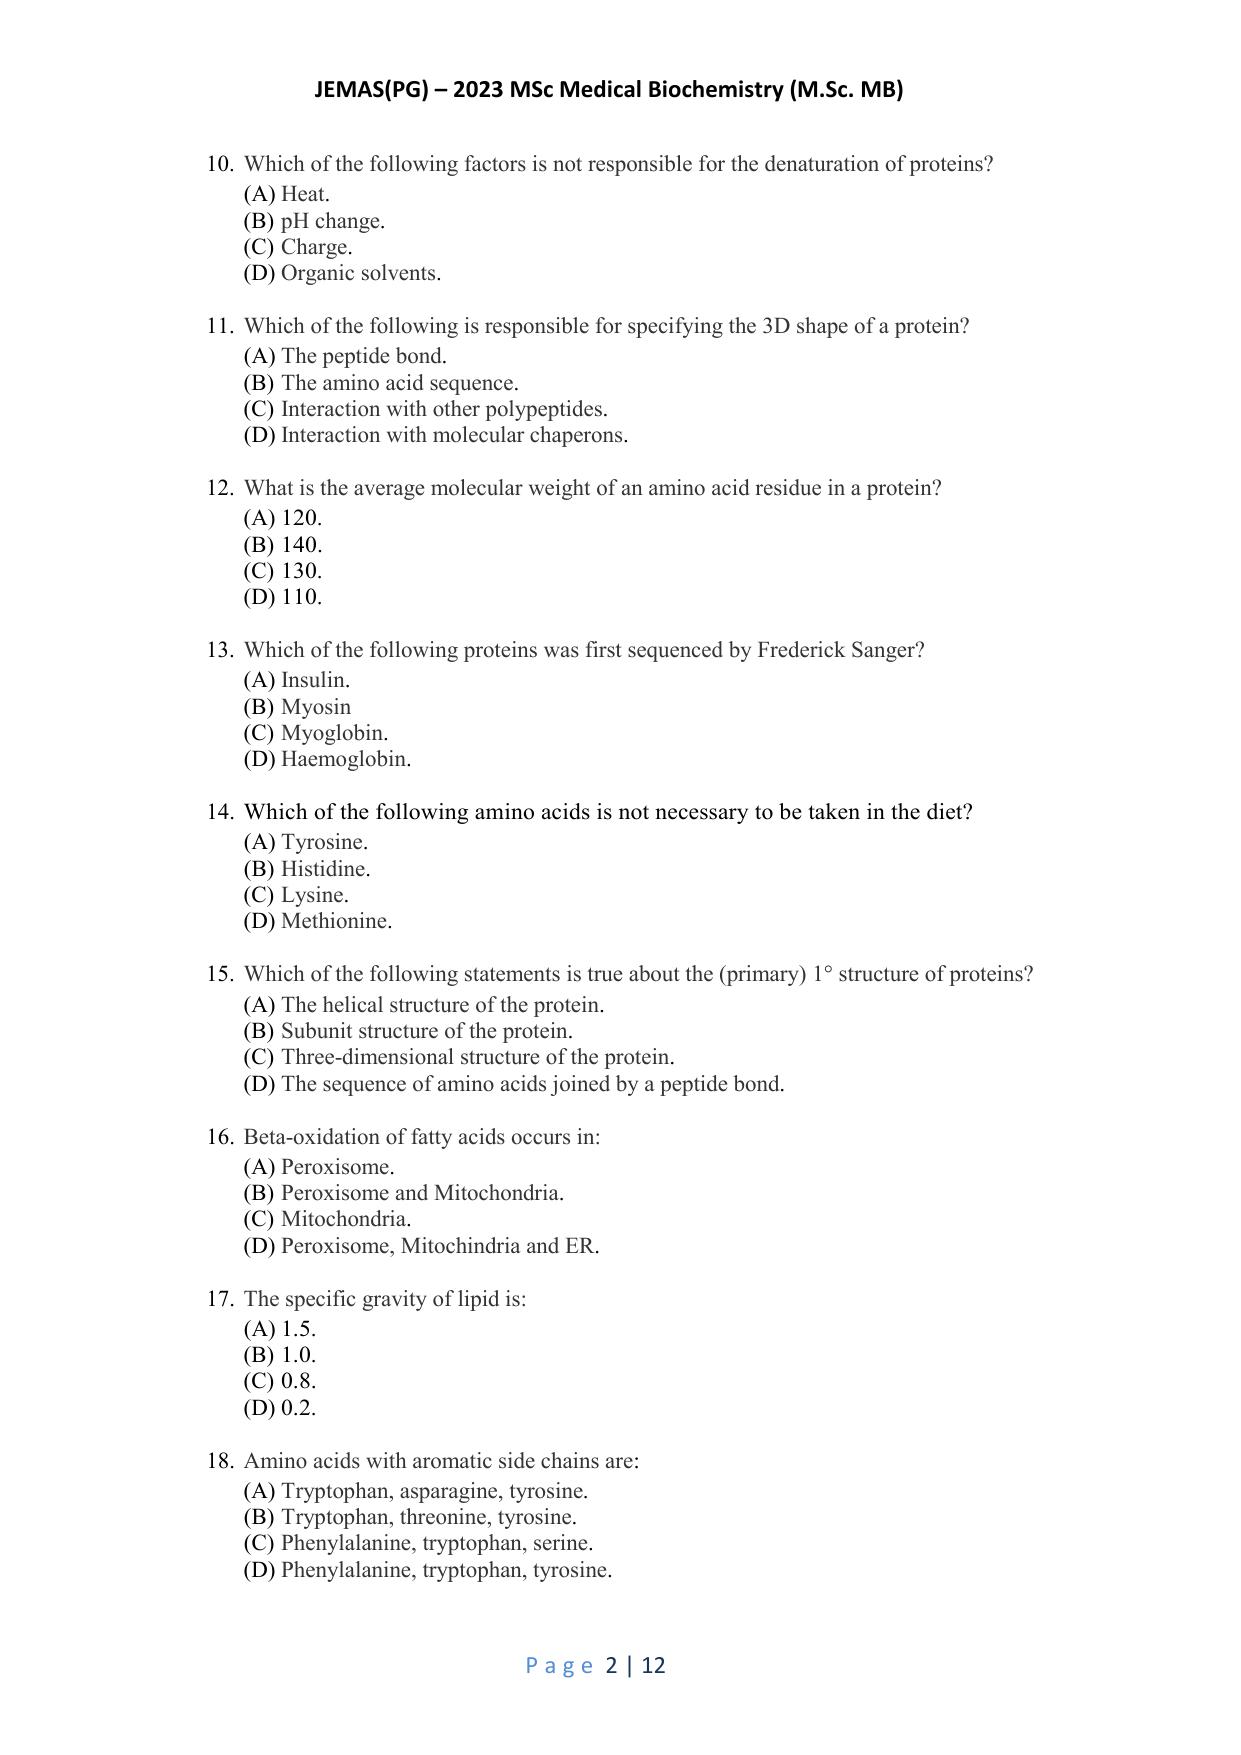 WB JEMAS (PG) M.Sc MB 2023 Question Paper - Page 3